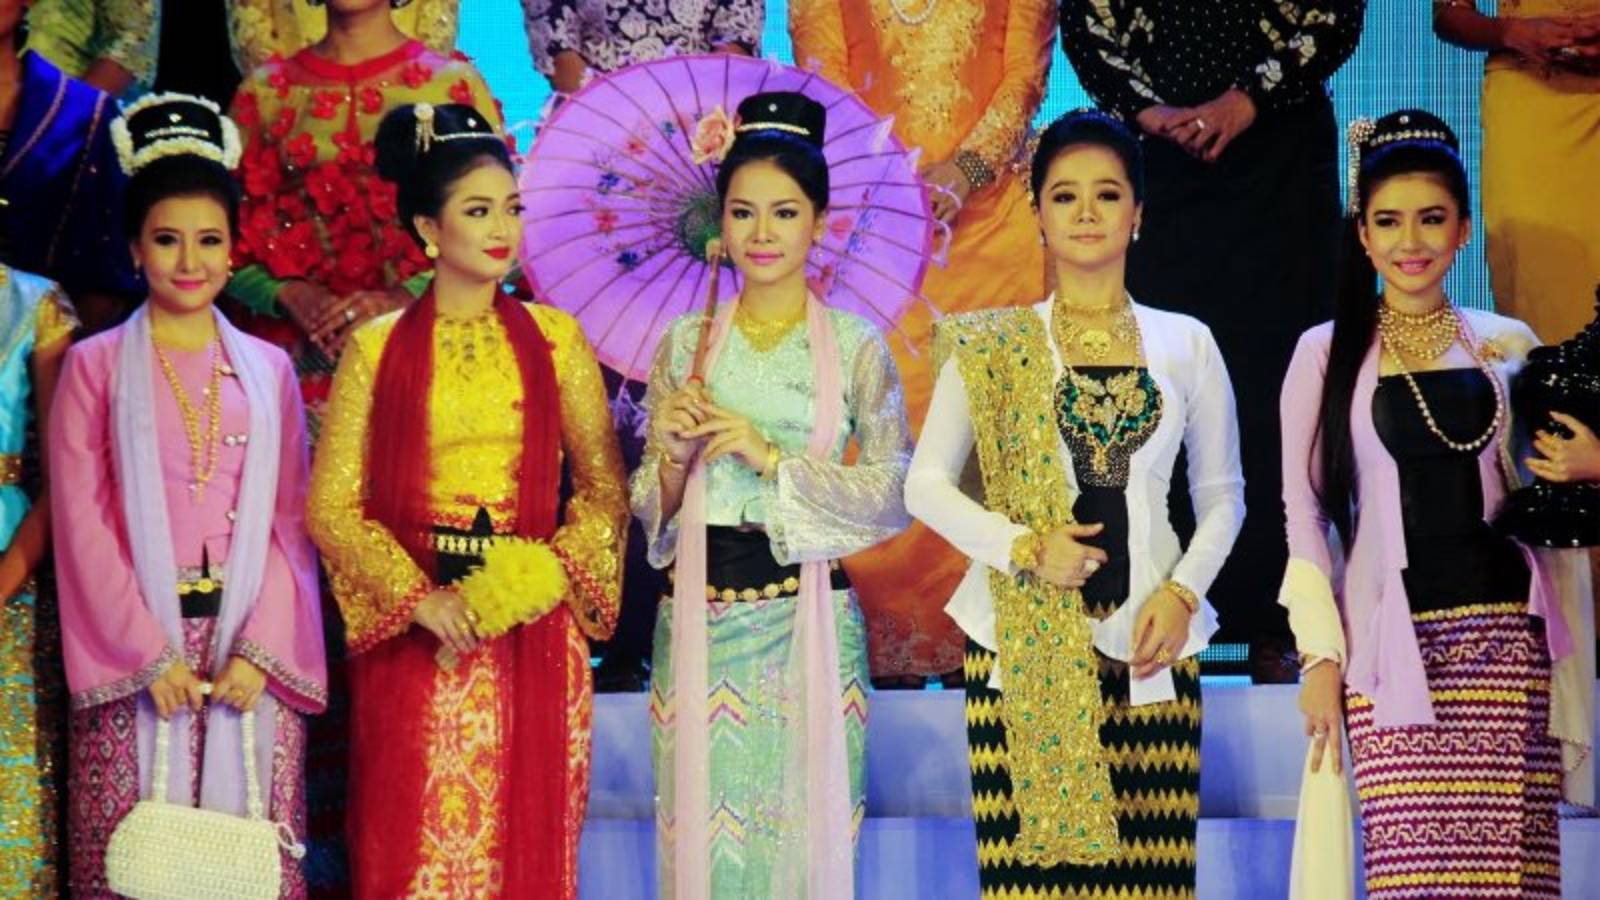 Dress Code or Costumes Worn By Women in Myanmar